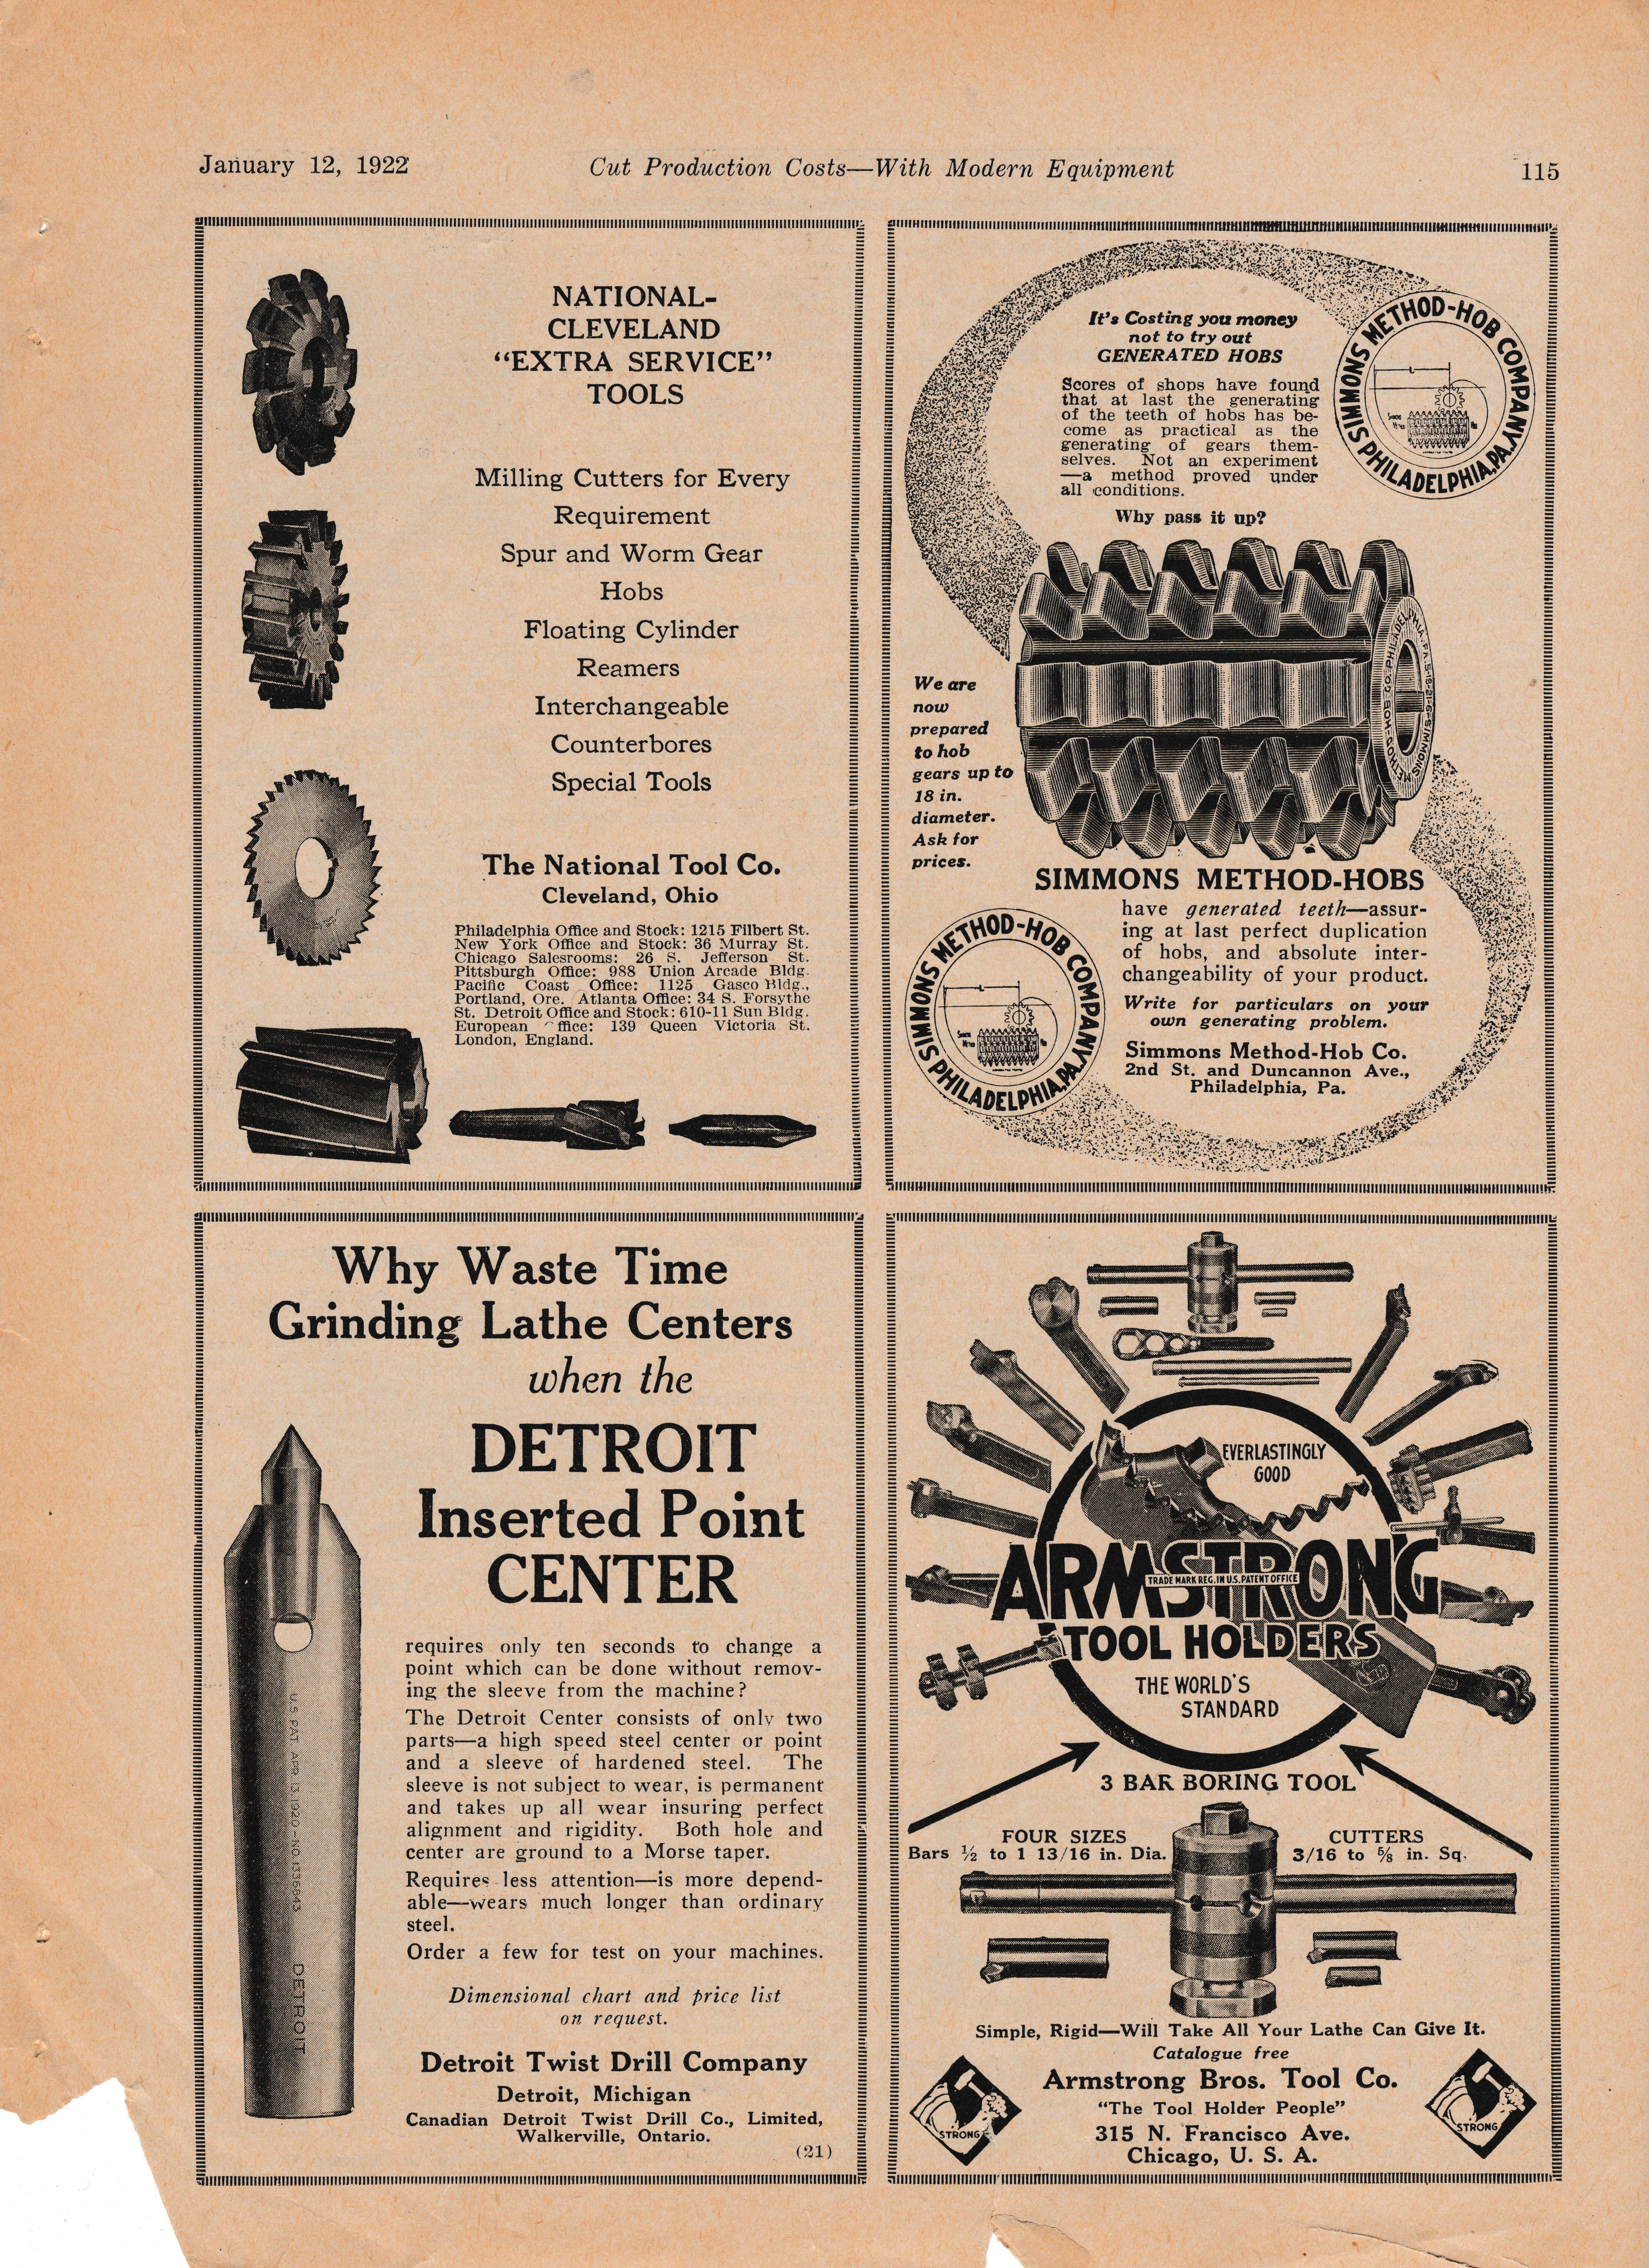 Machinery-Magazine-January-12-1922-pg115-Detrot-Twist-drill-co-Simmon-Hob-Co-Armstrong-Bros-Tool-Holders-Vol-56-No1-600dpi.jpg